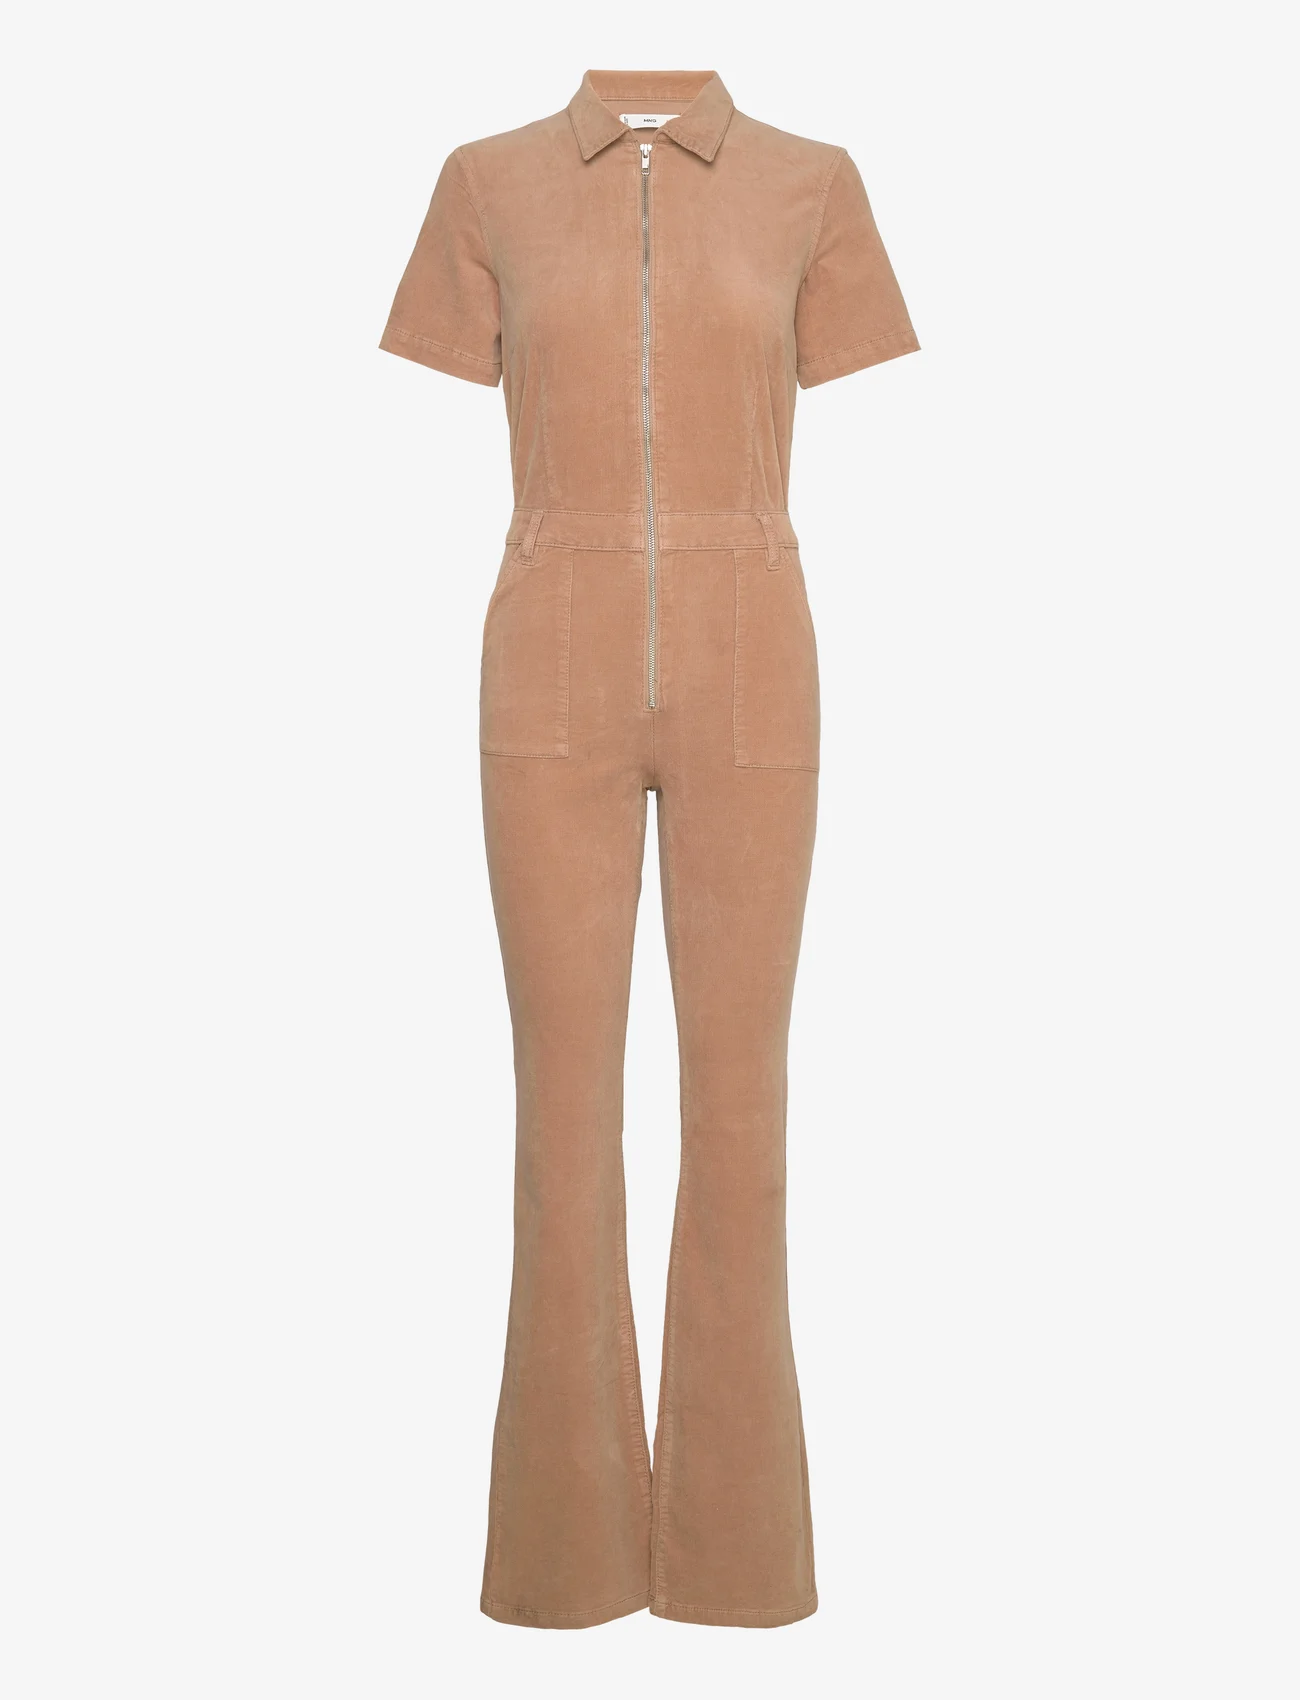 Mango - Corduroy jumpsuit with zip - kvinder - medium brown - 0